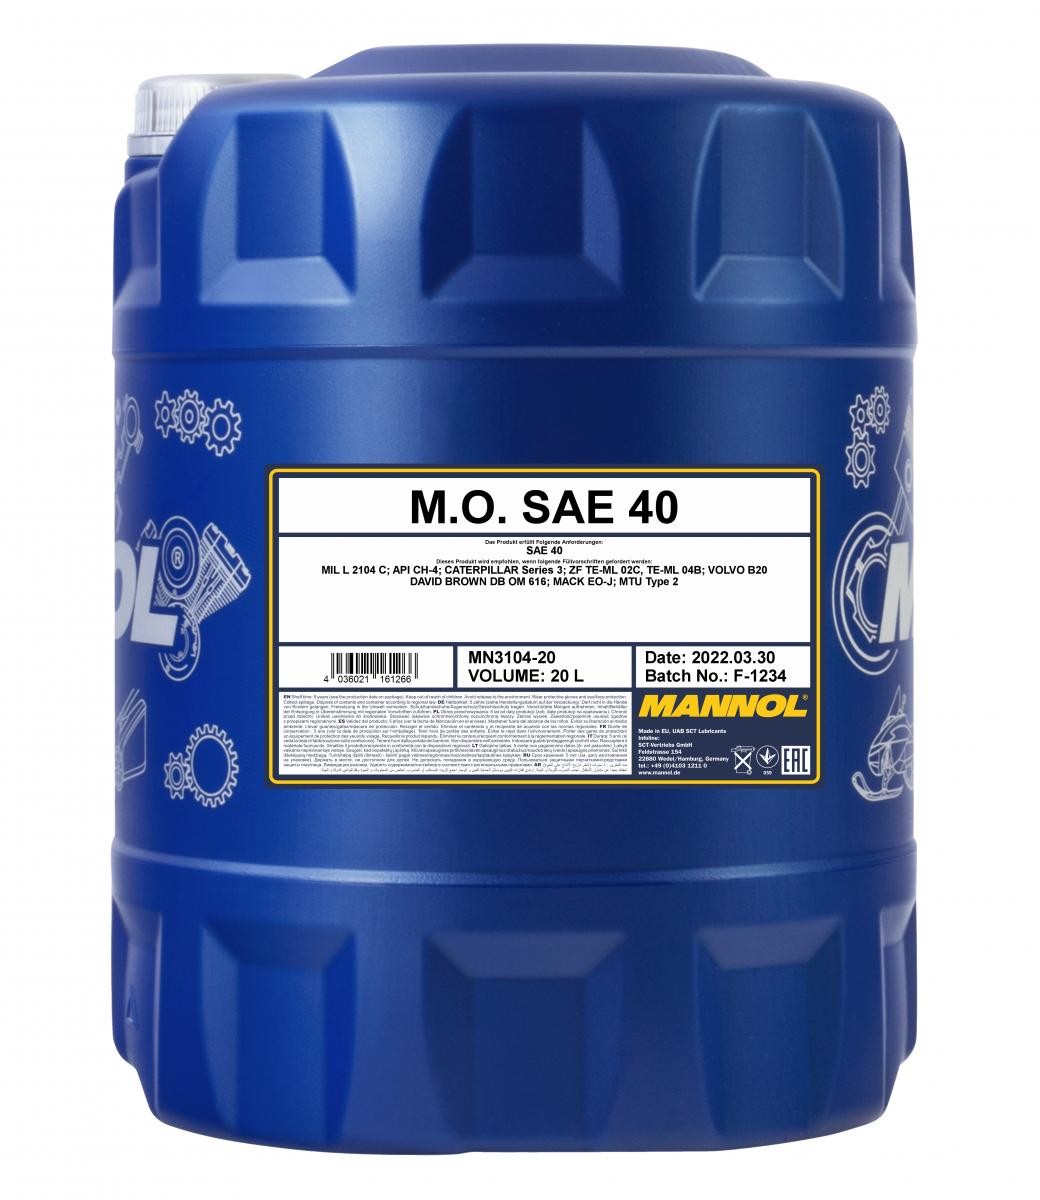 MANNOL M.O. SAE 40 MN310420 Multi-function Oil